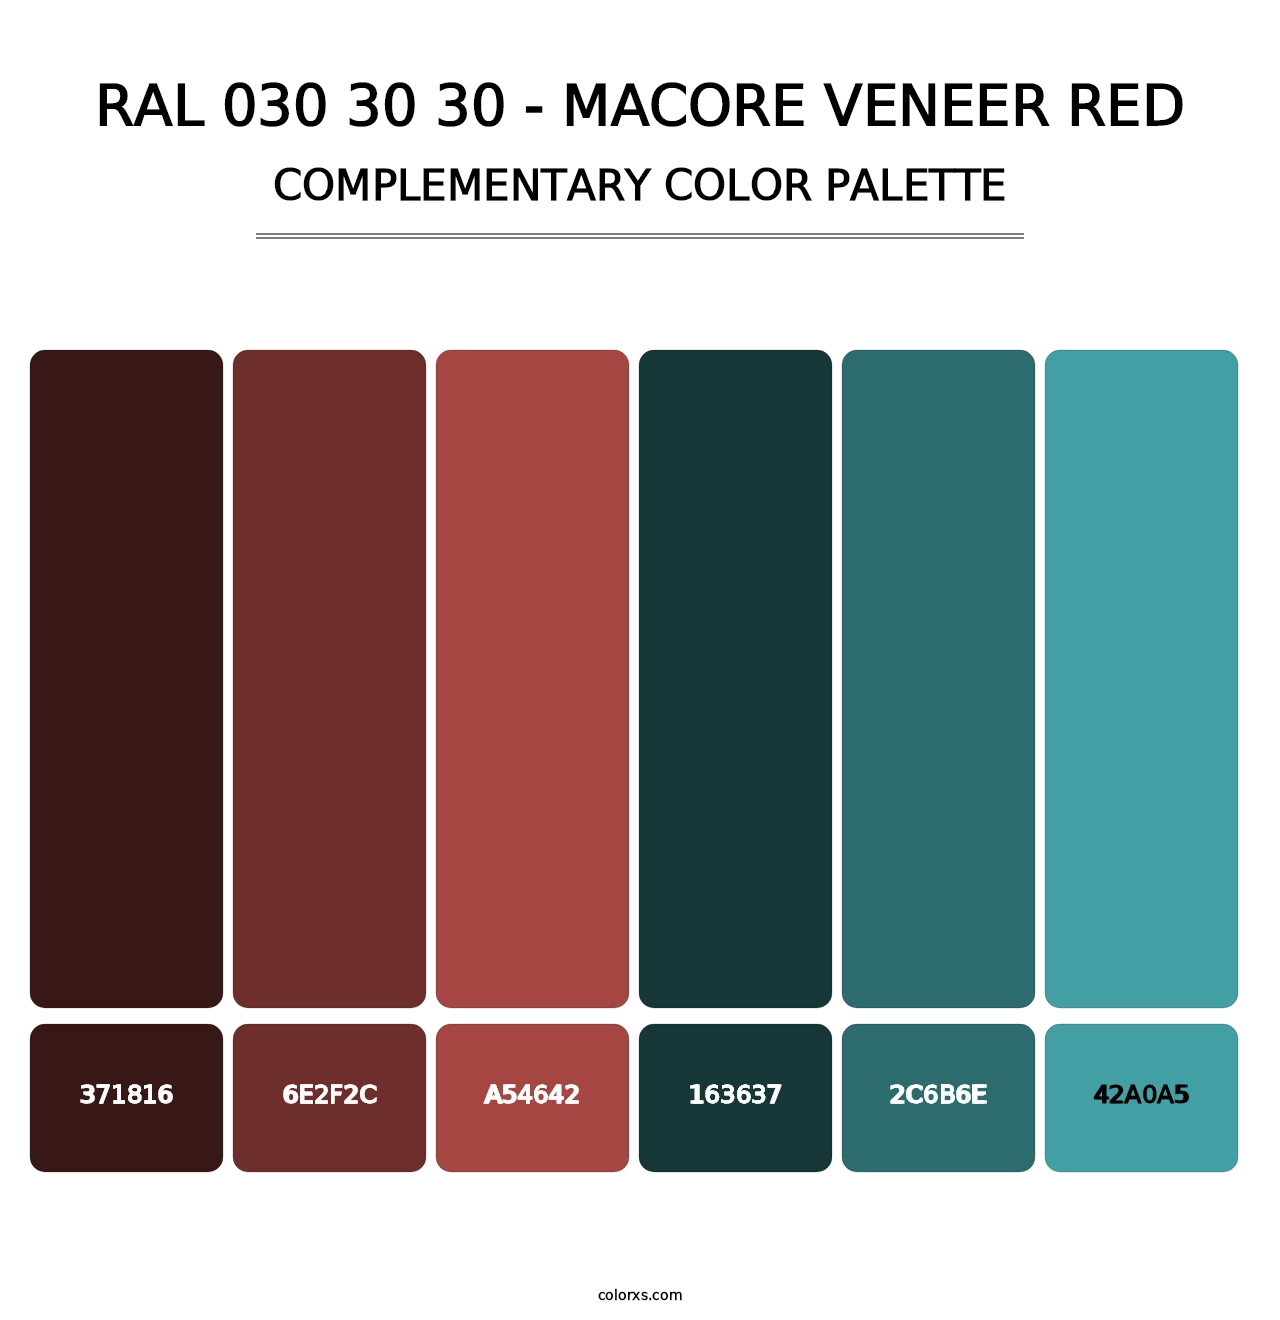 RAL 030 30 30 - Macore Veneer Red - Complementary Color Palette